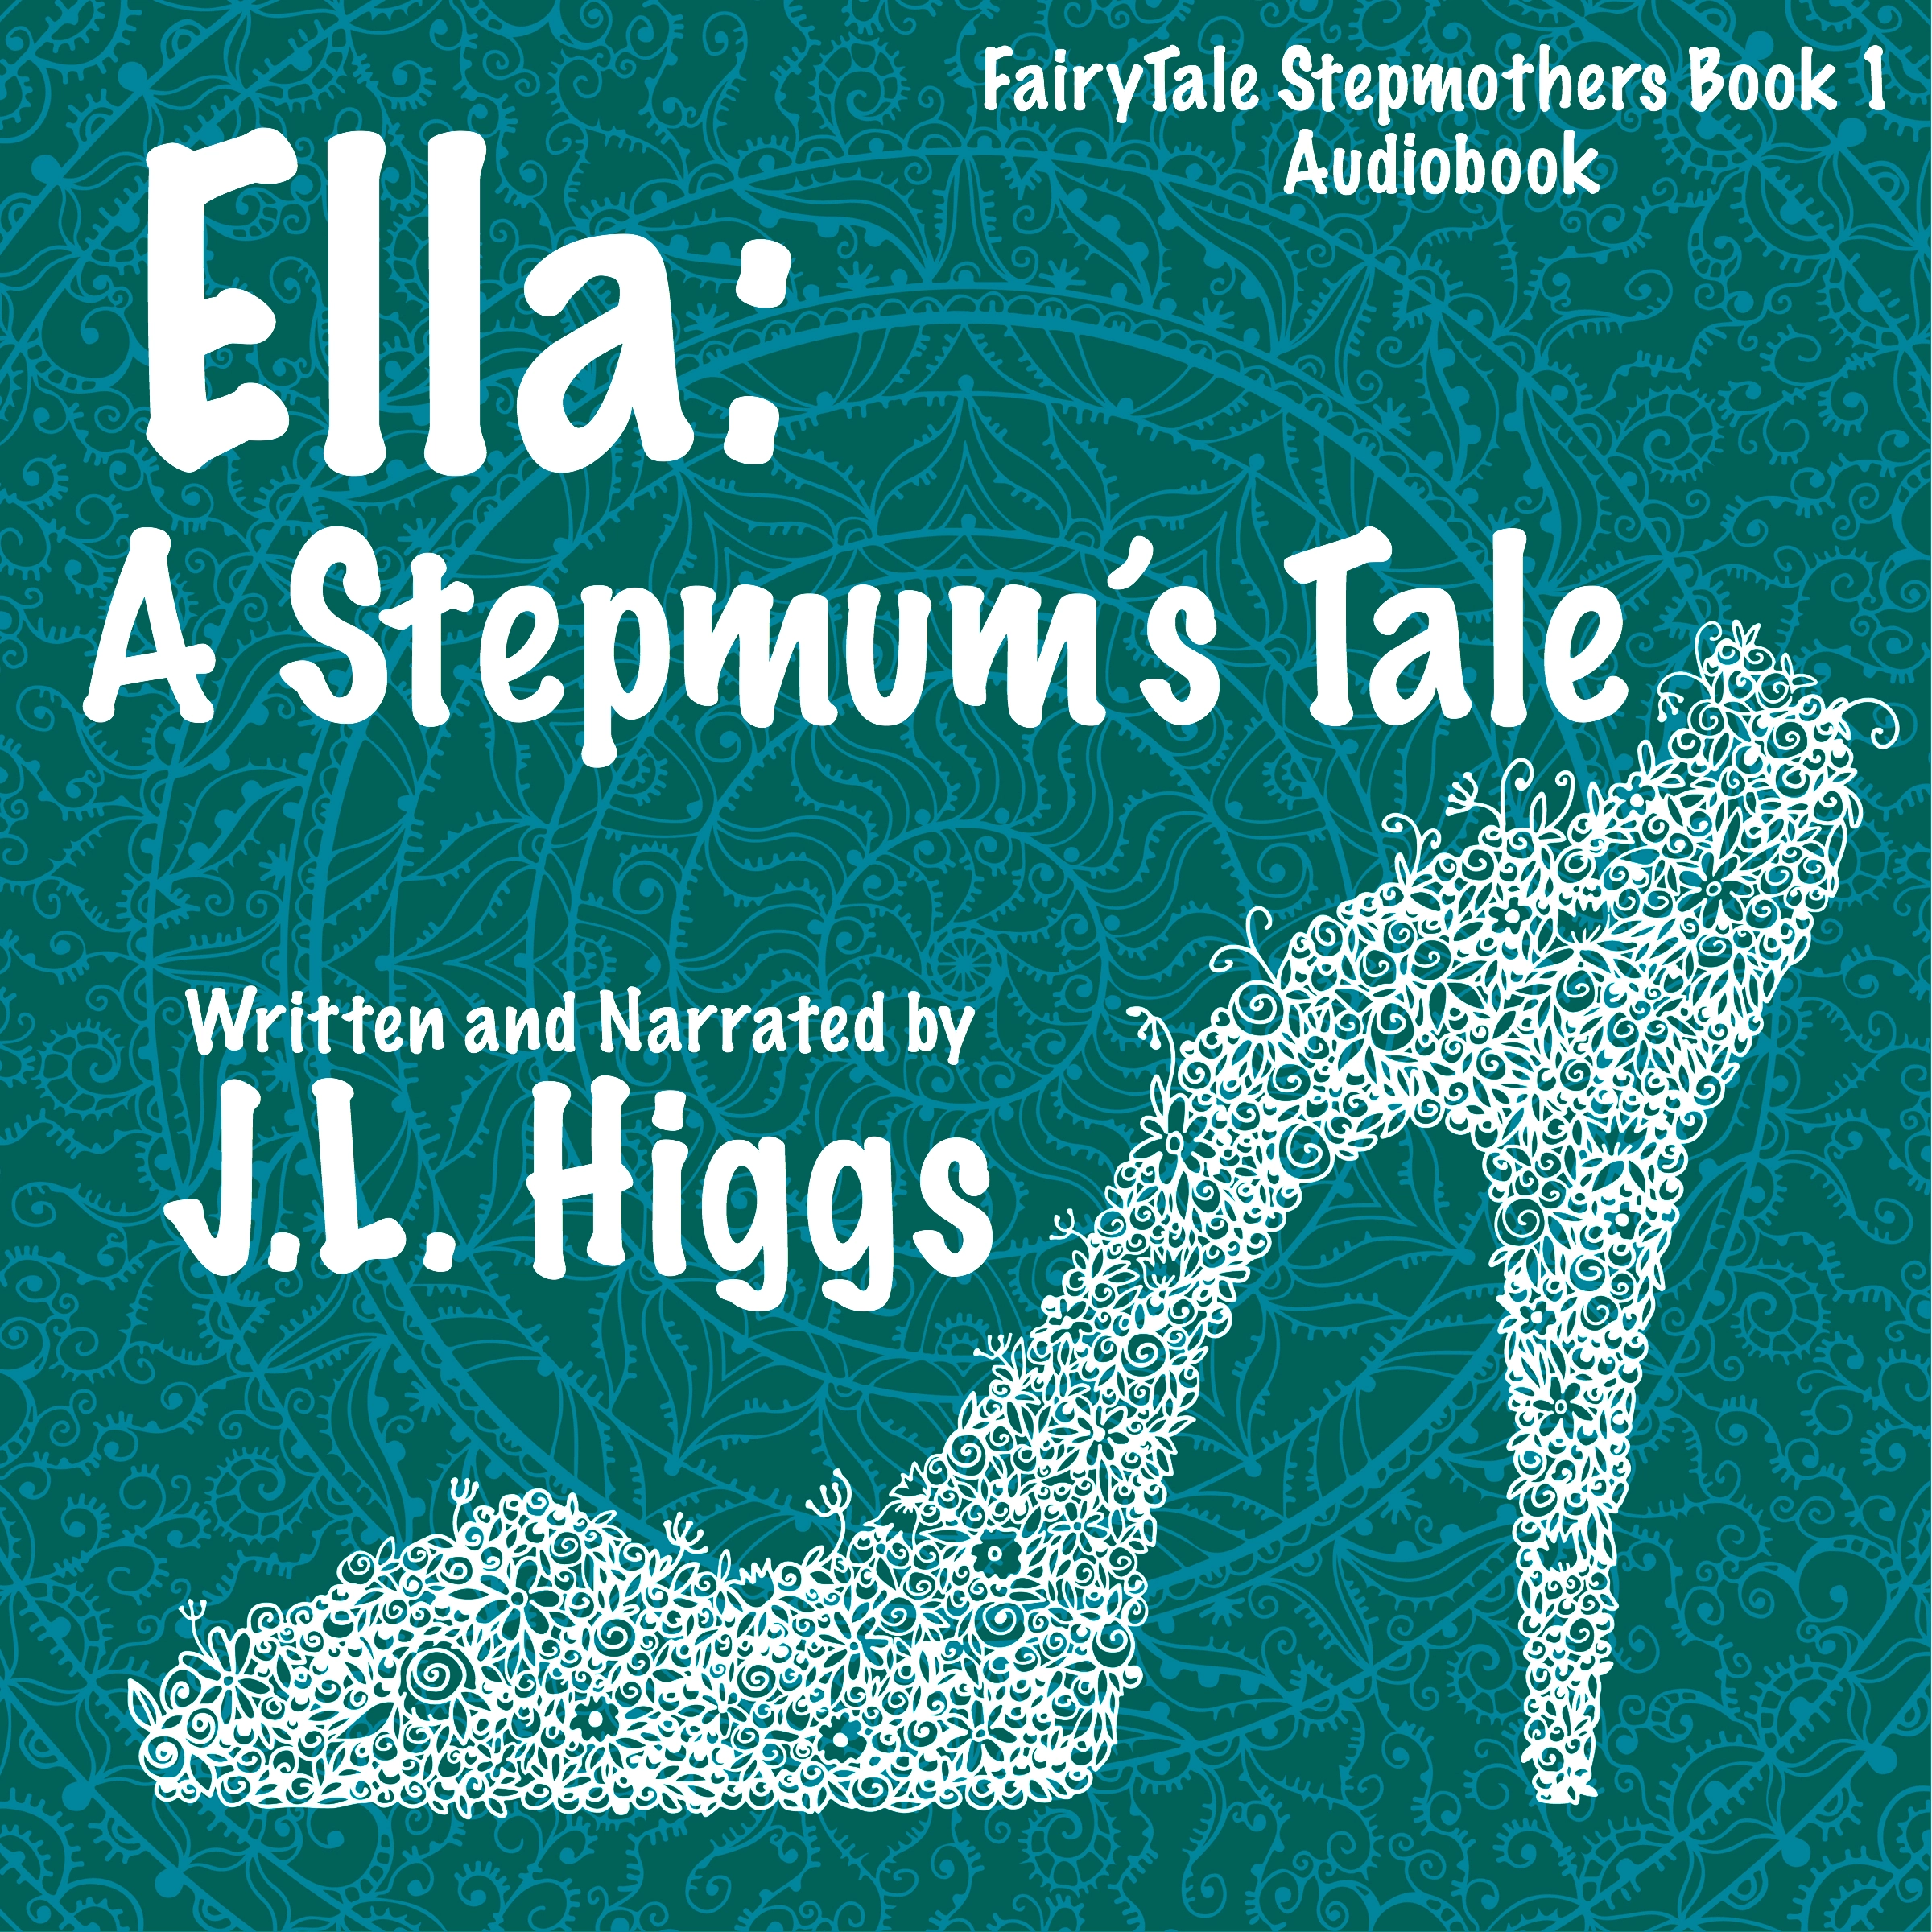 Ella: A Stepmum's Tale by J.L. Higgs Audiobook